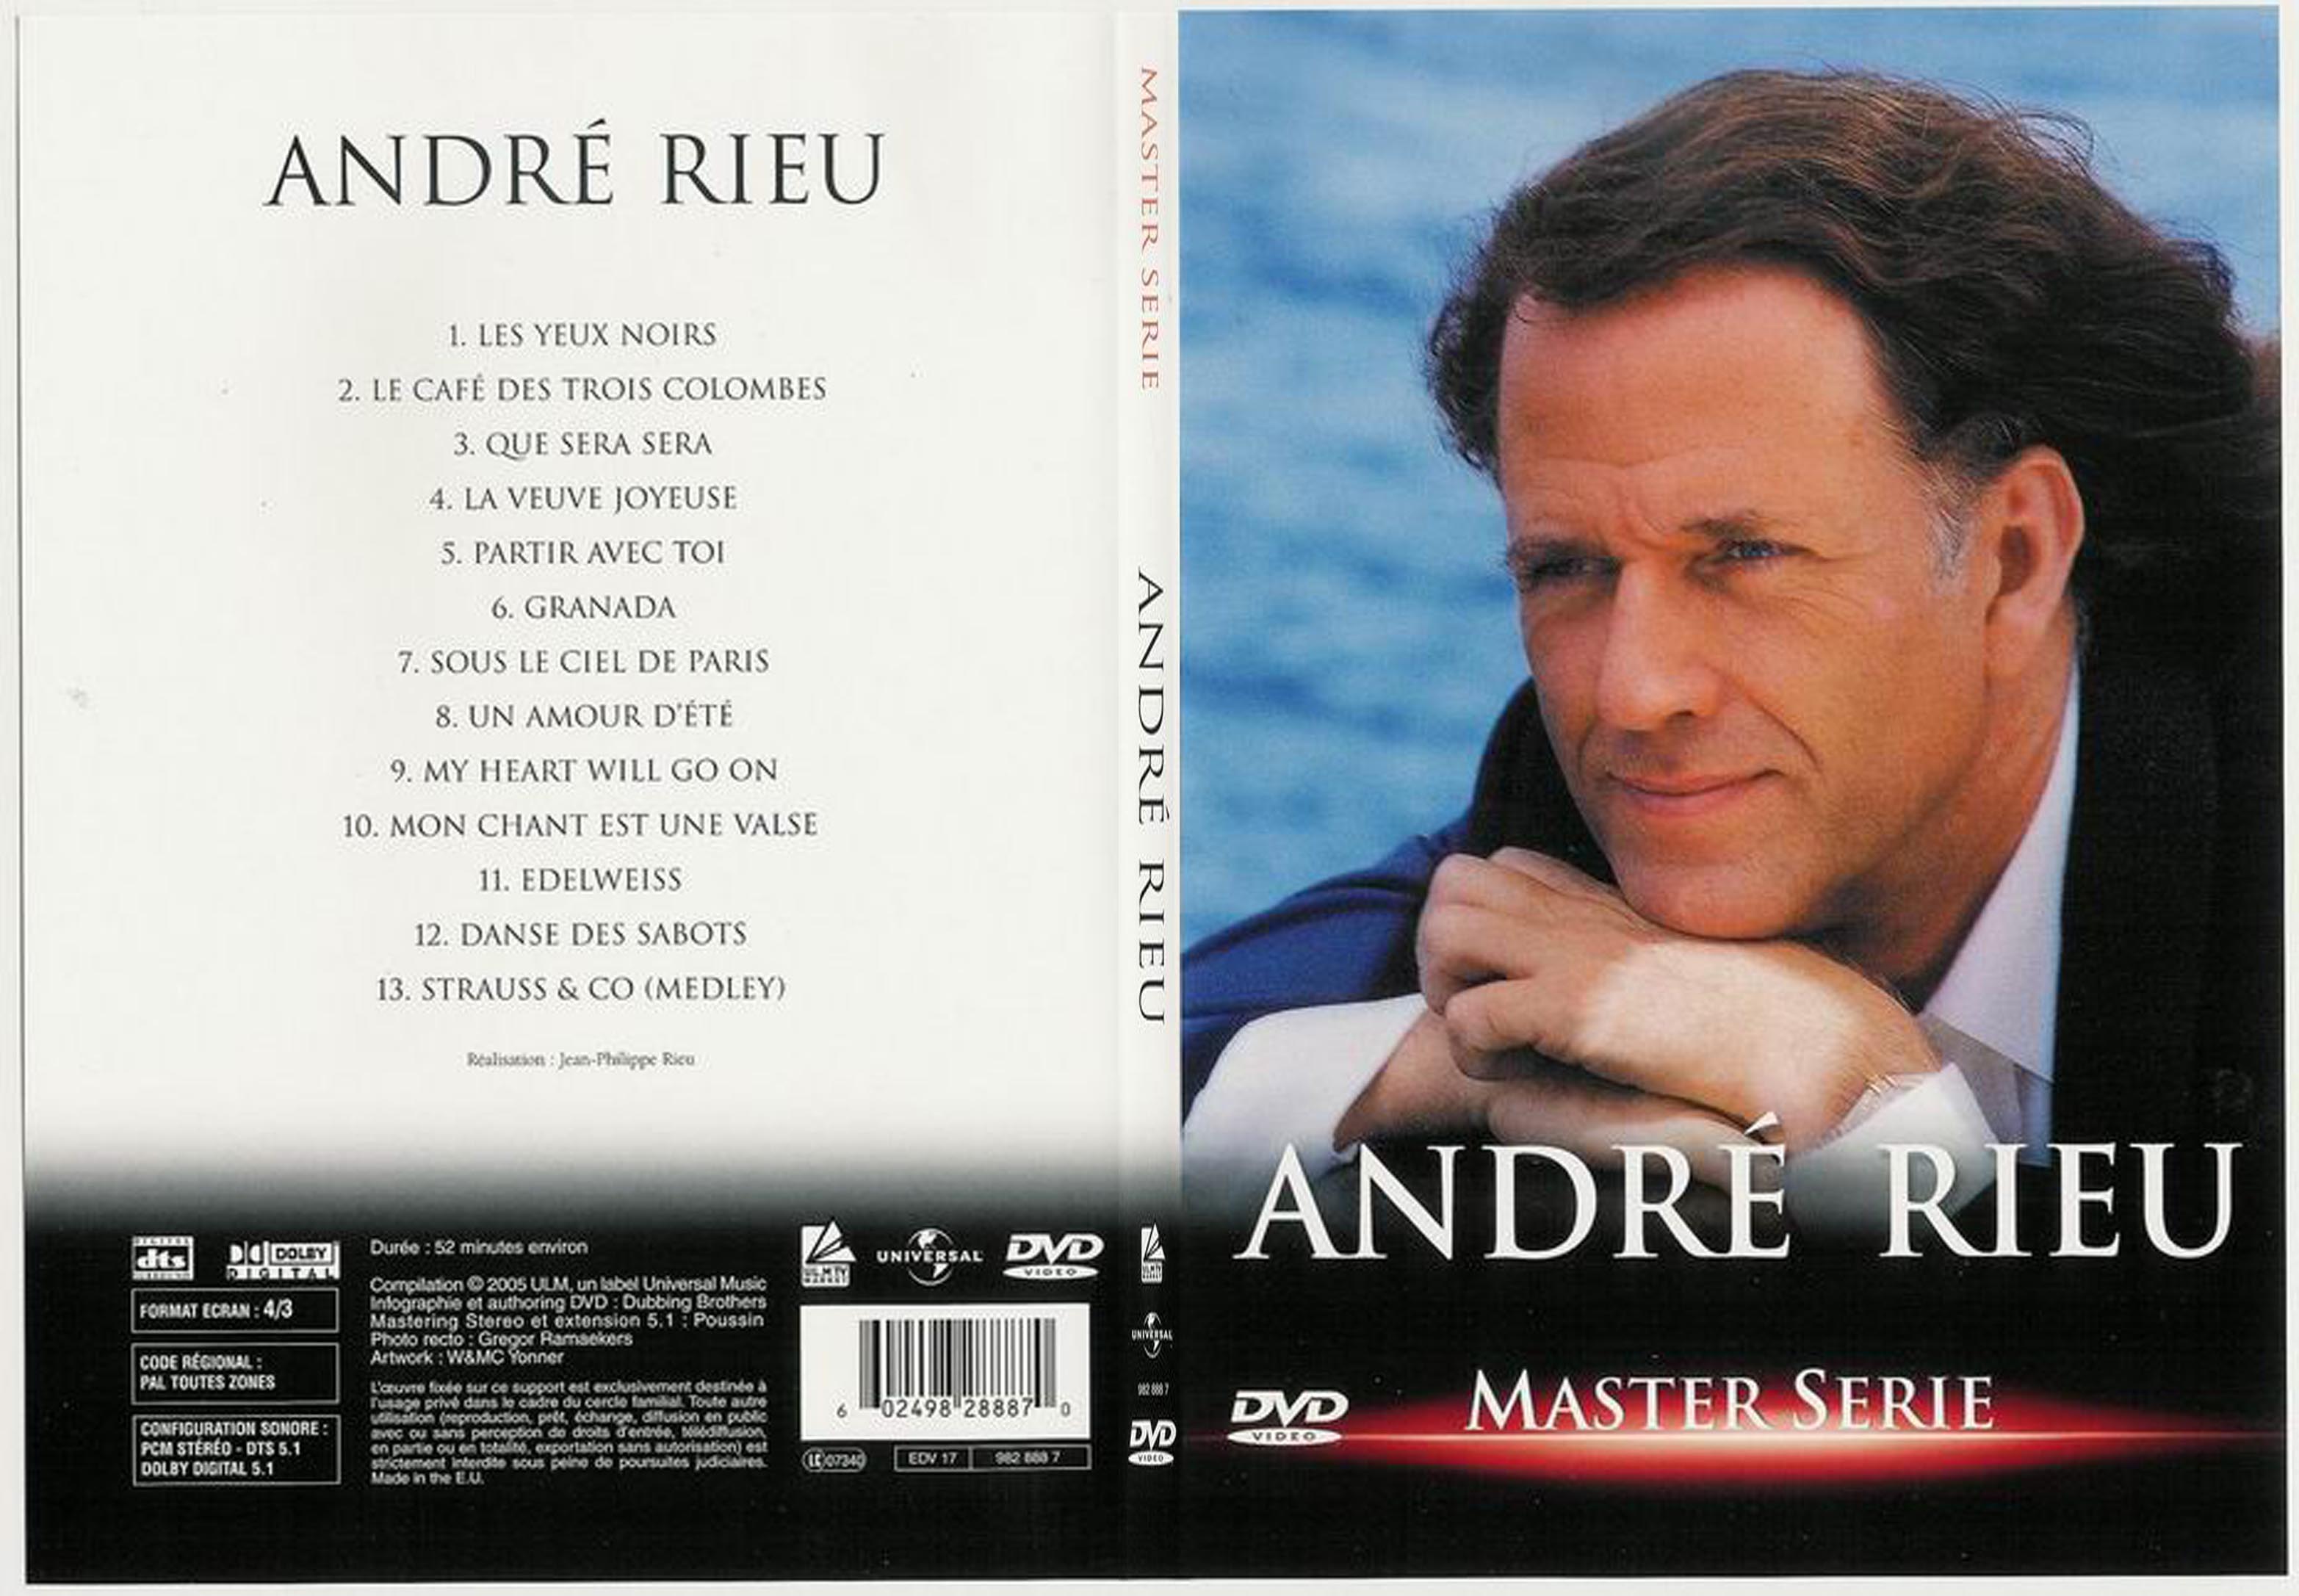 Jaquette DVD Andr Rieu Master serie - SLIM